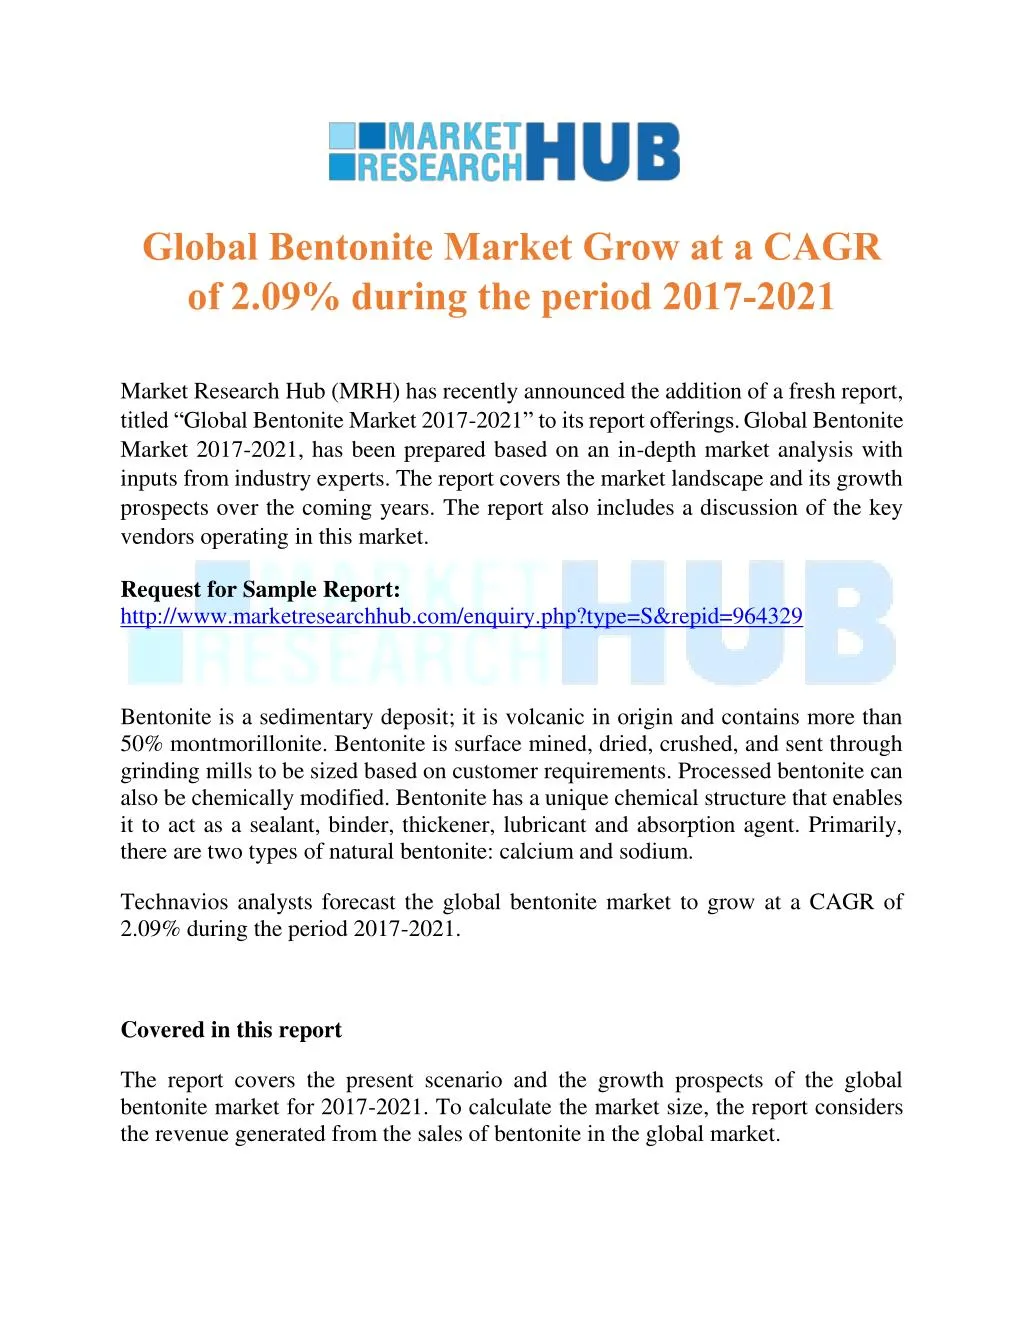 global bentonite market grow at a cagr